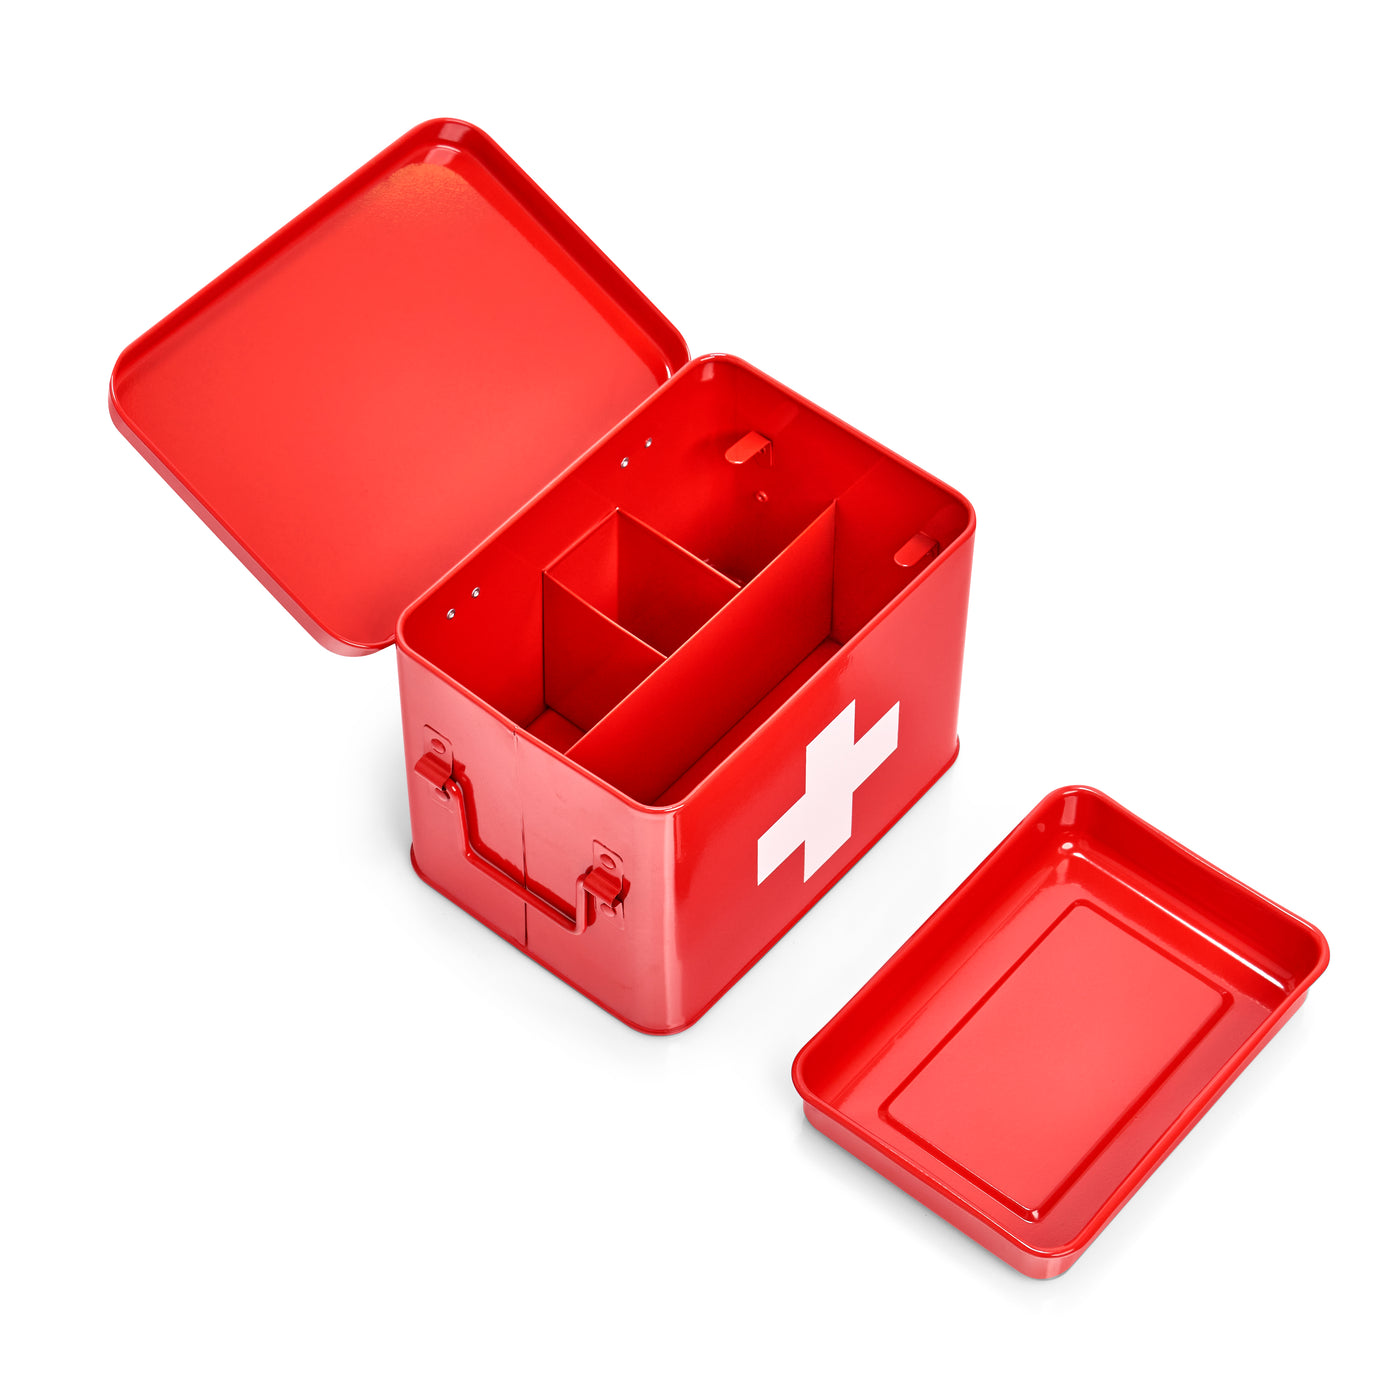 Zeller Present Medizin-Box